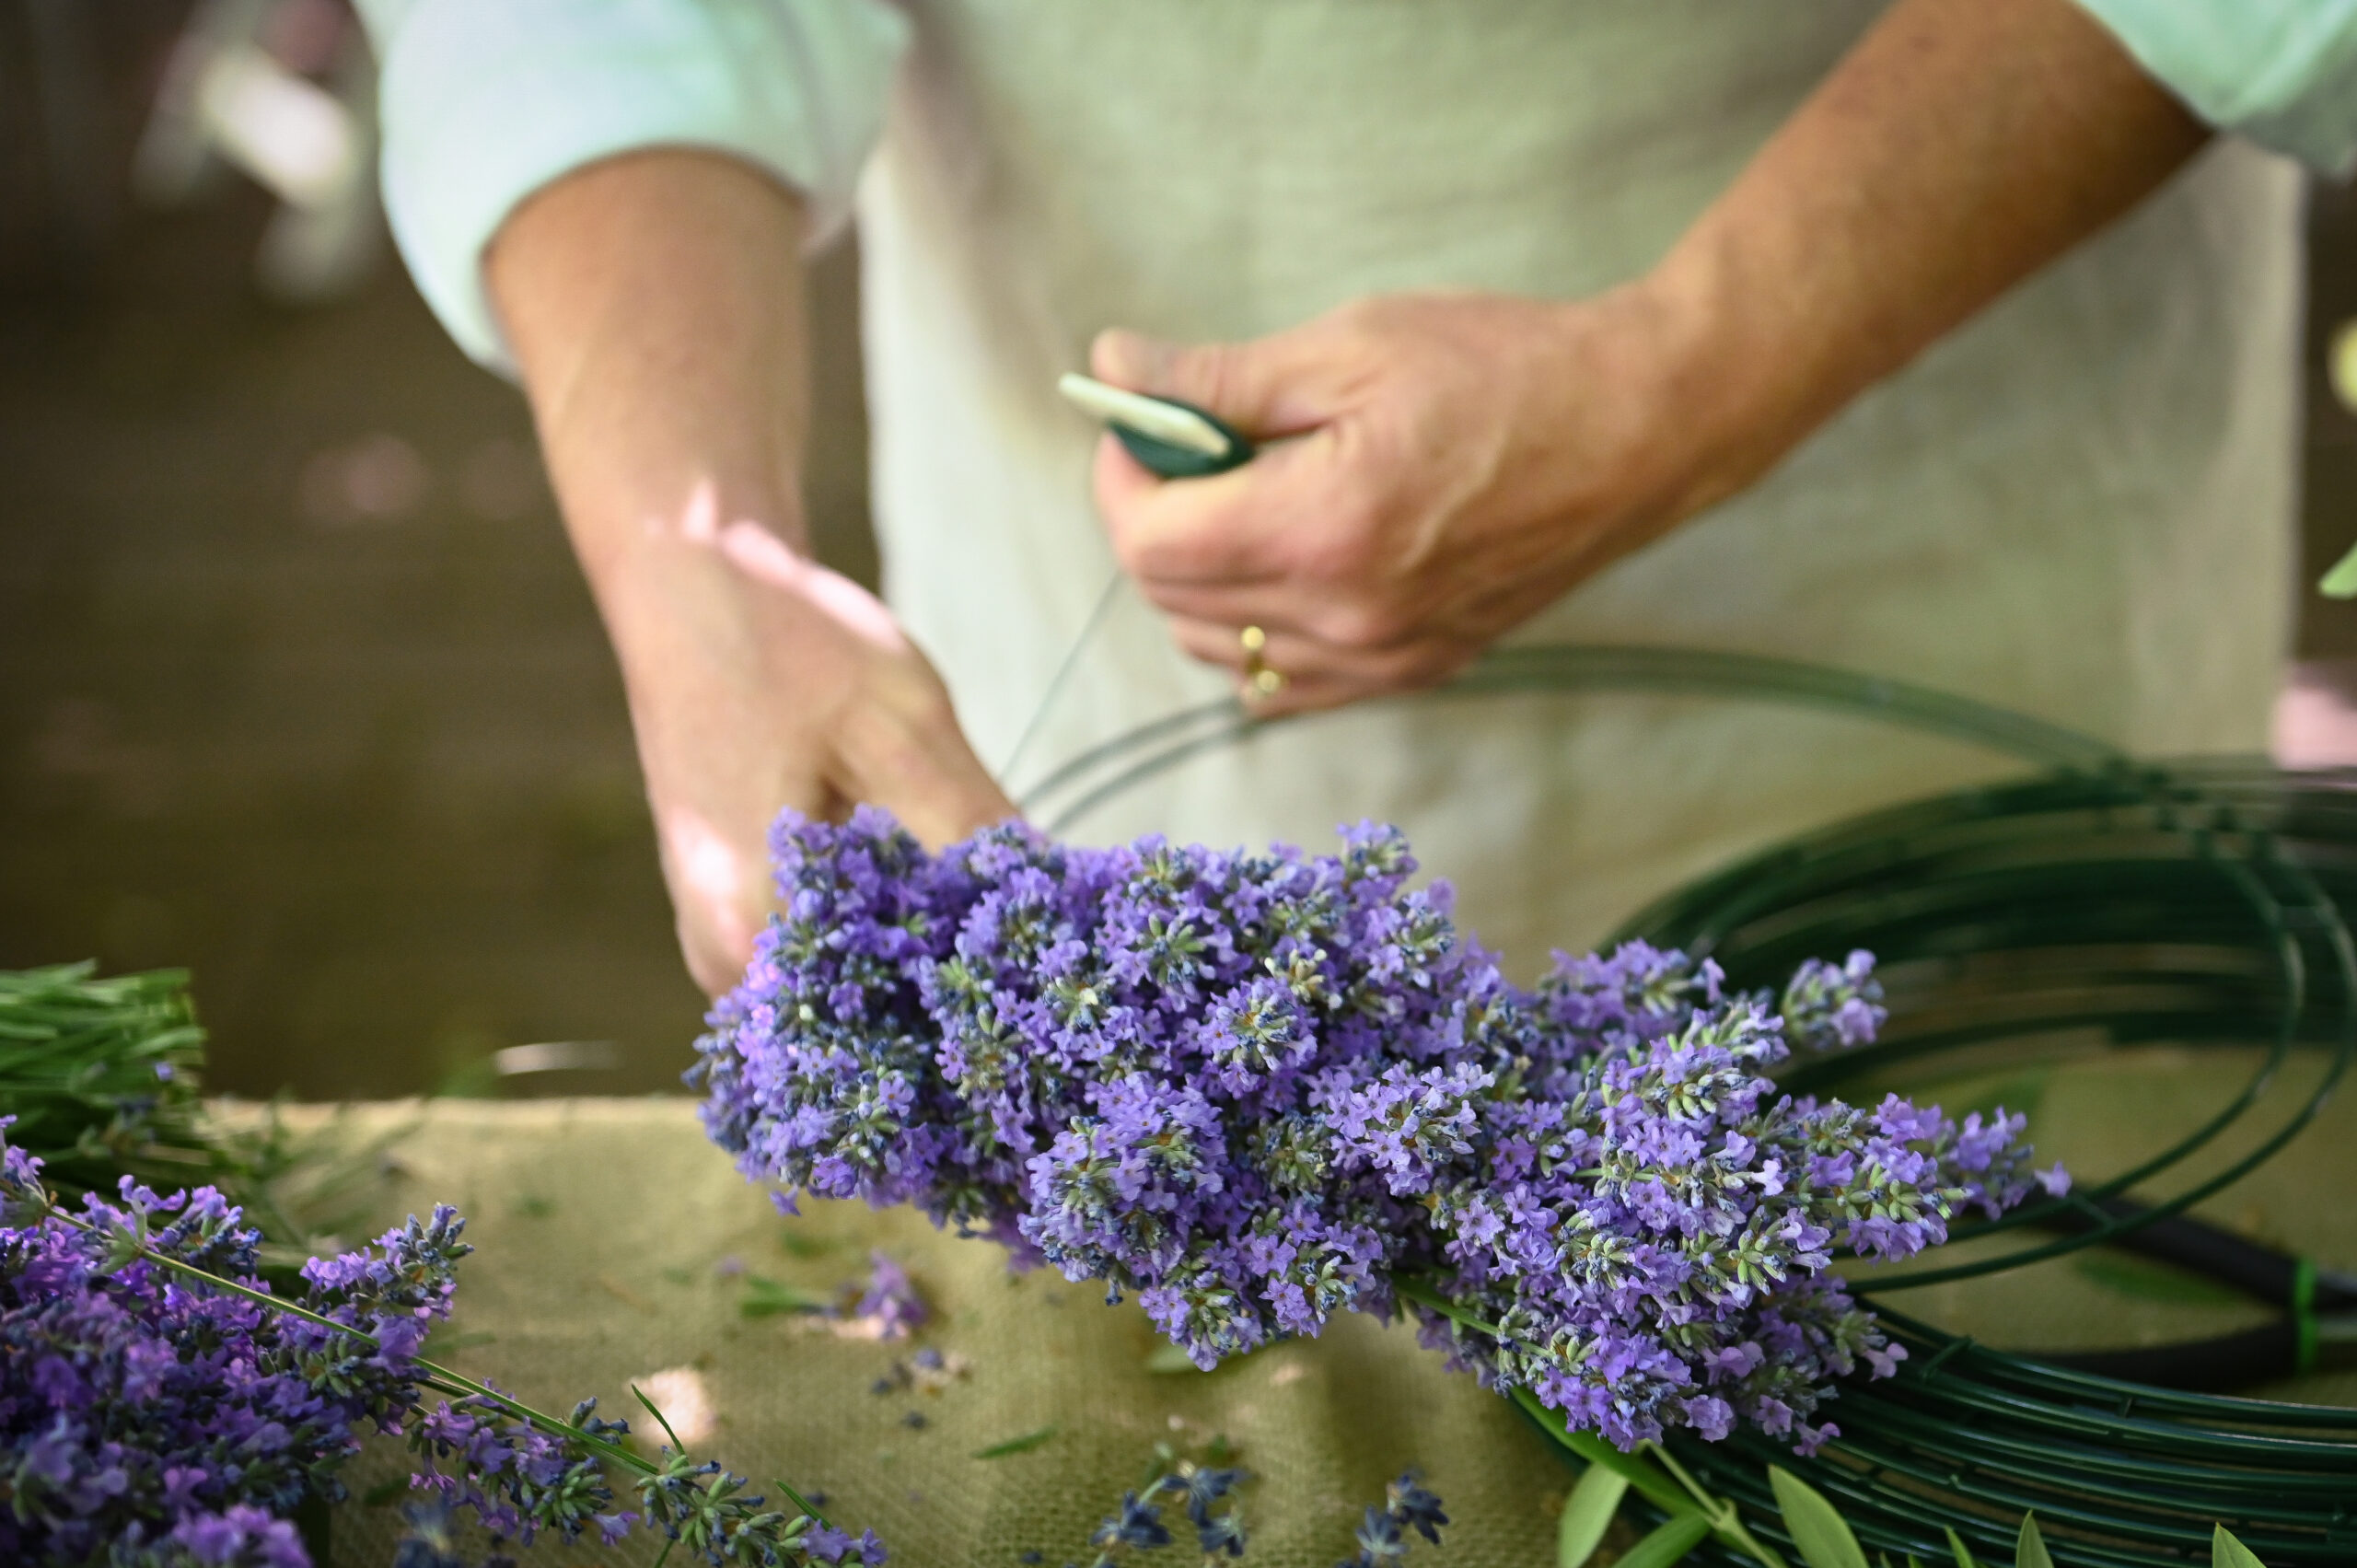 Lavender Wreath Making